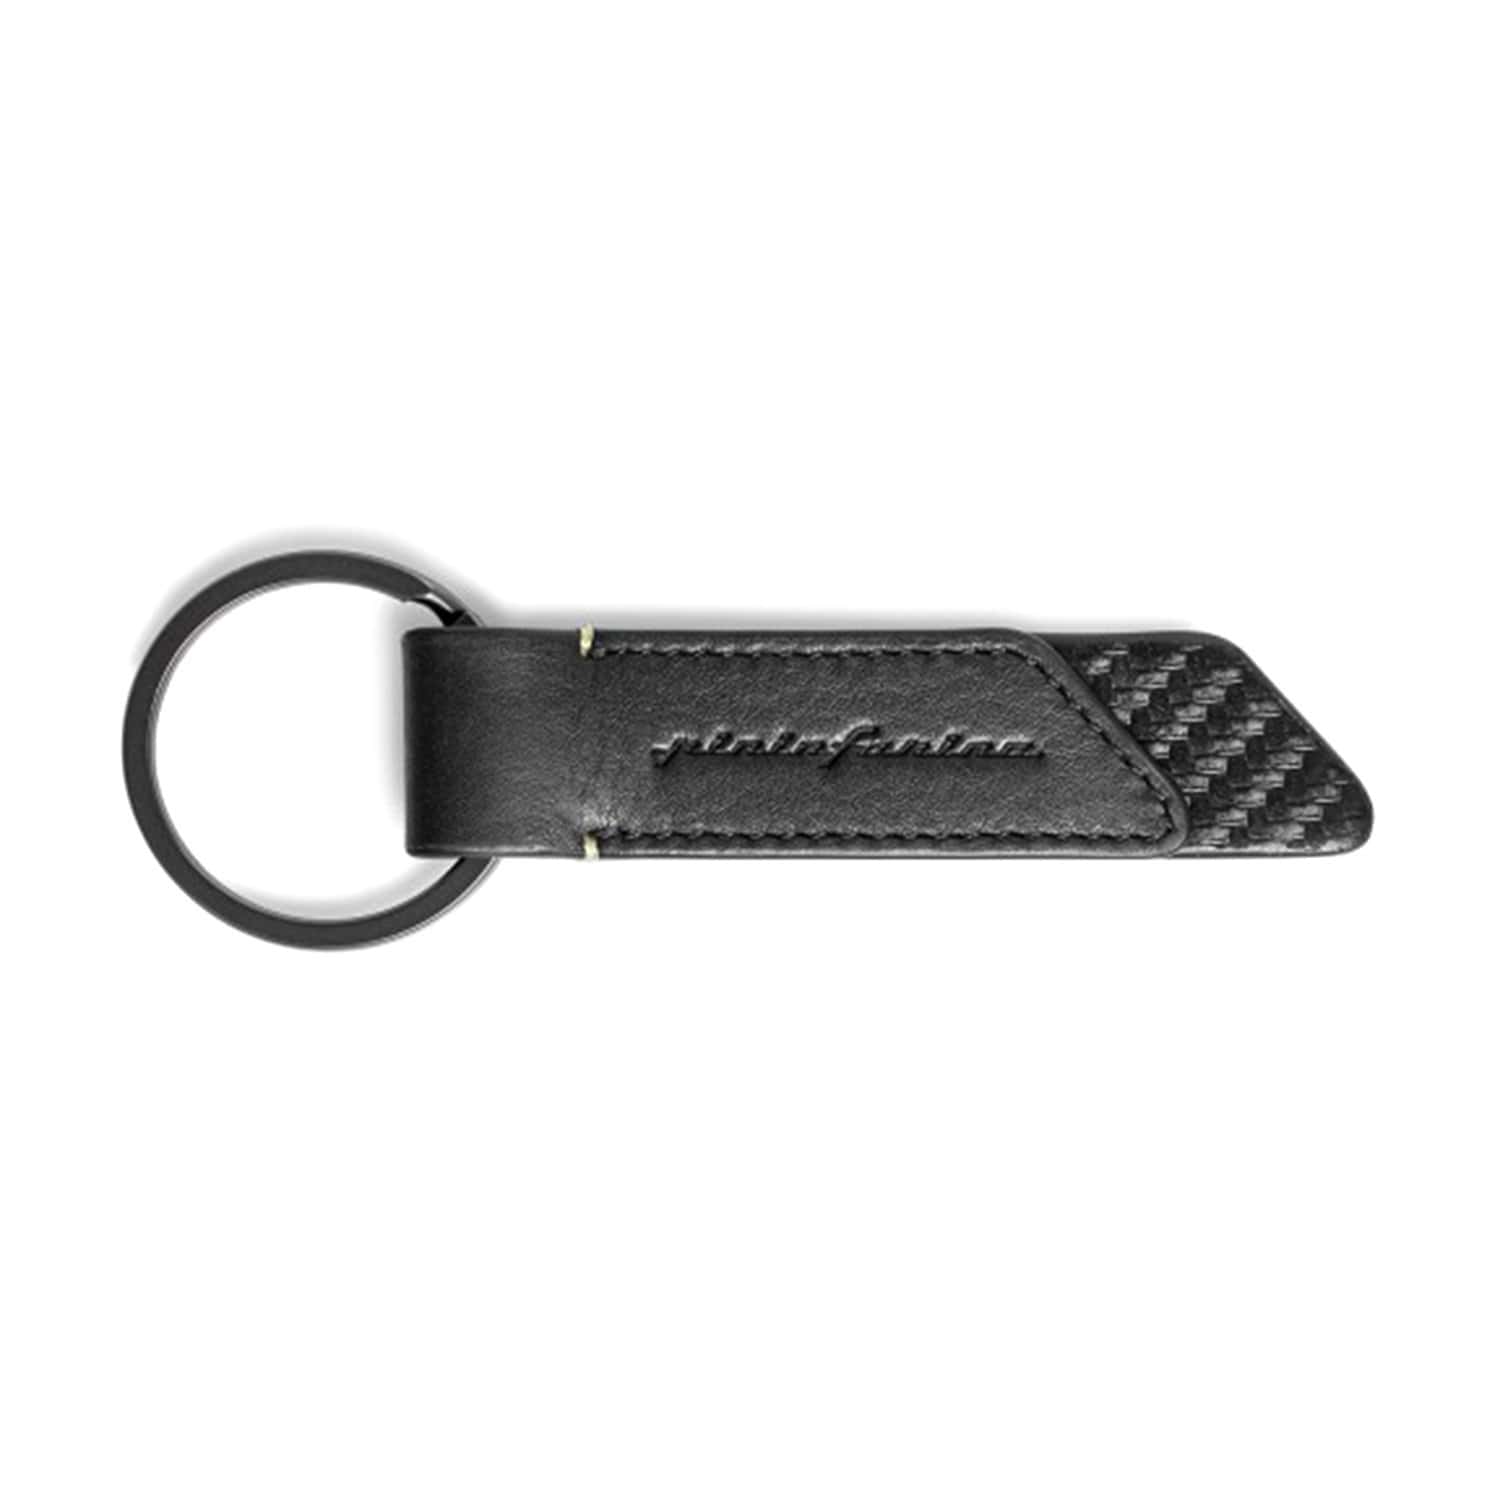 Pininfarina Folio Key Holder - Carbon - NPKFL00405 - Jashanmal Home